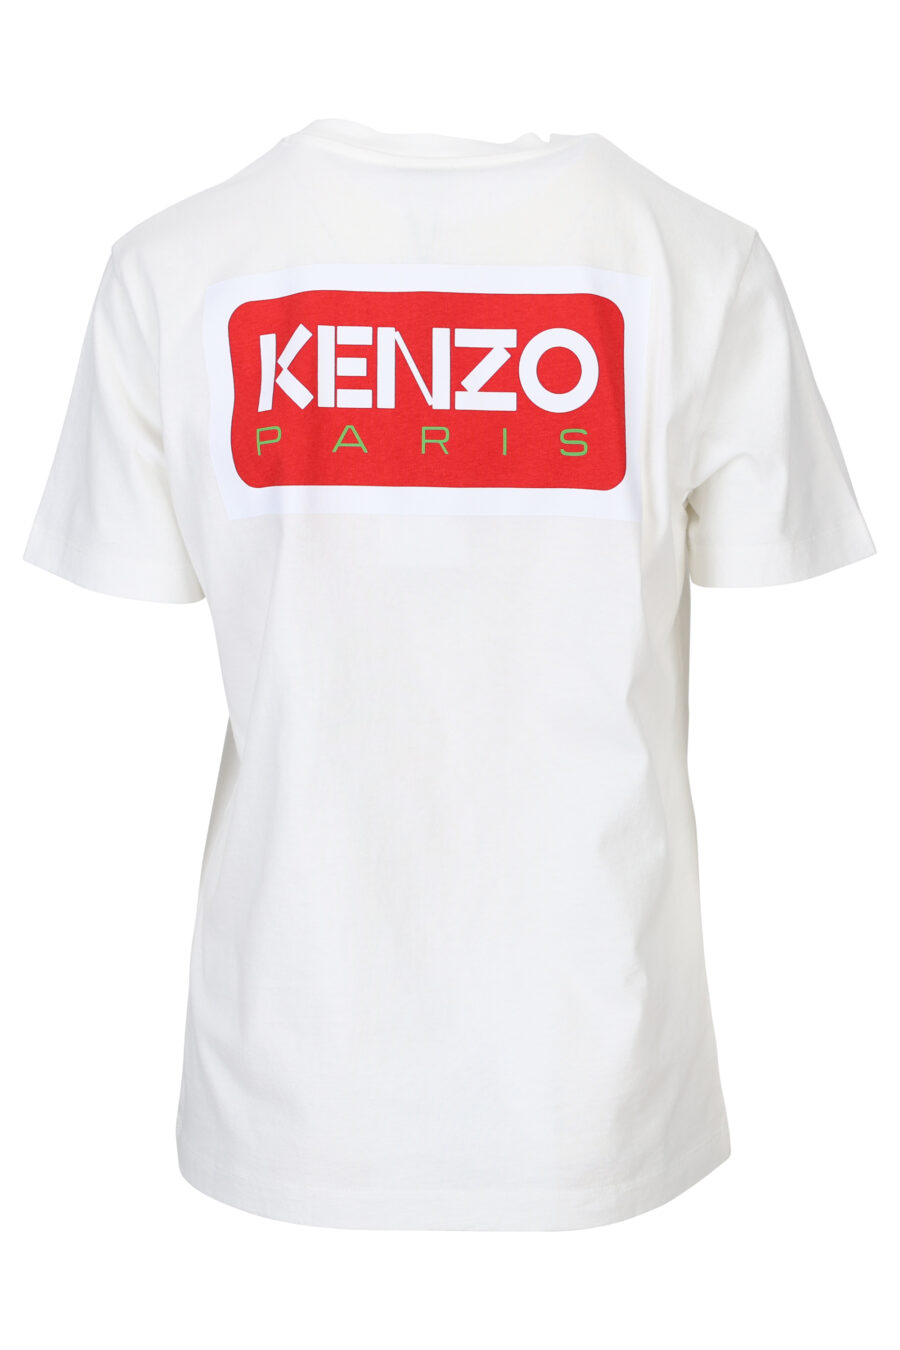 White oversize t-shirt with "kenzo paris" logo - 3612230520875 1